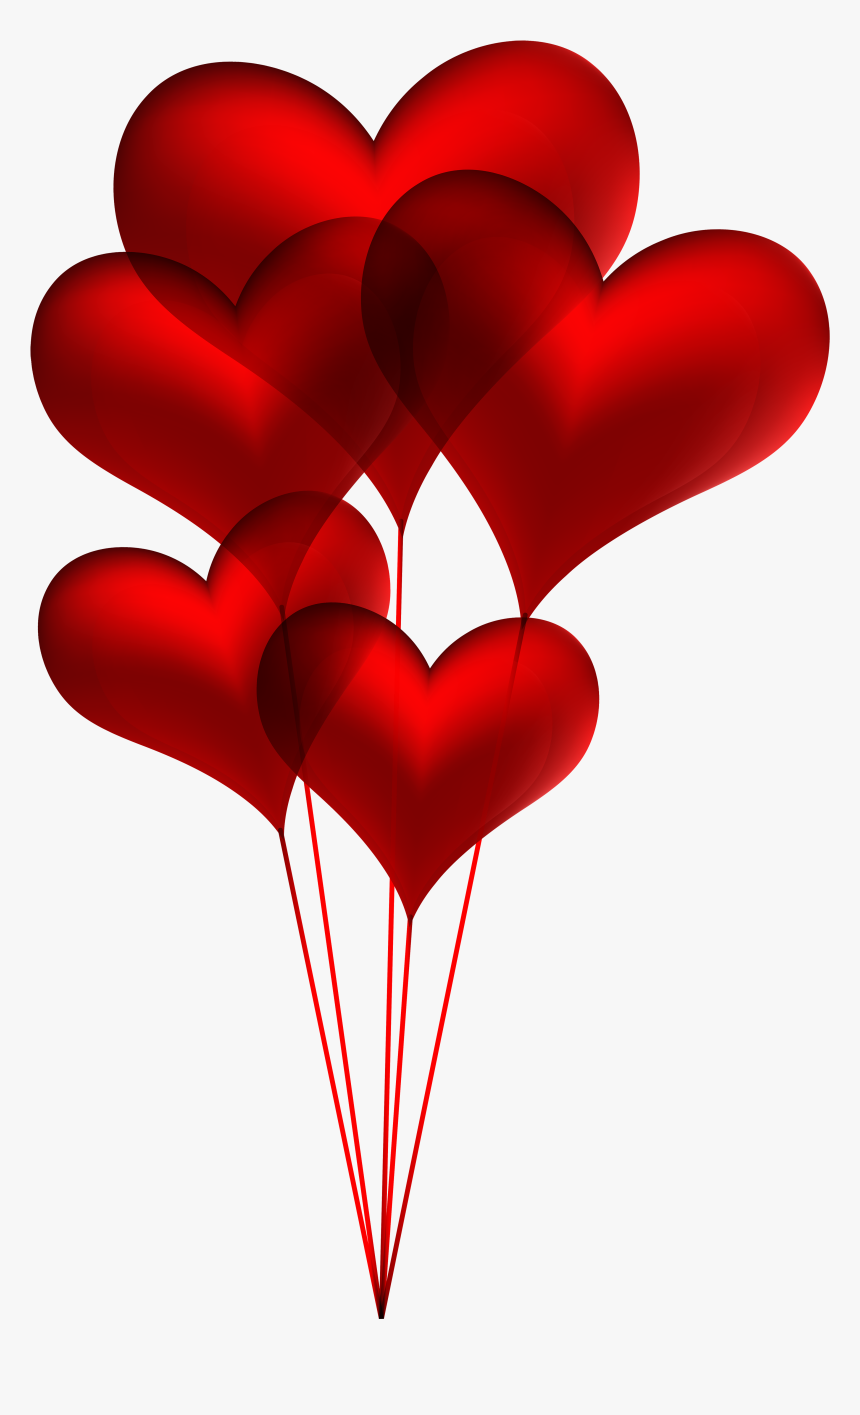 Red Heart Balloons Transparent Png Clip Art Image - Heart Balloons Clip Art, Png Download, Free Download